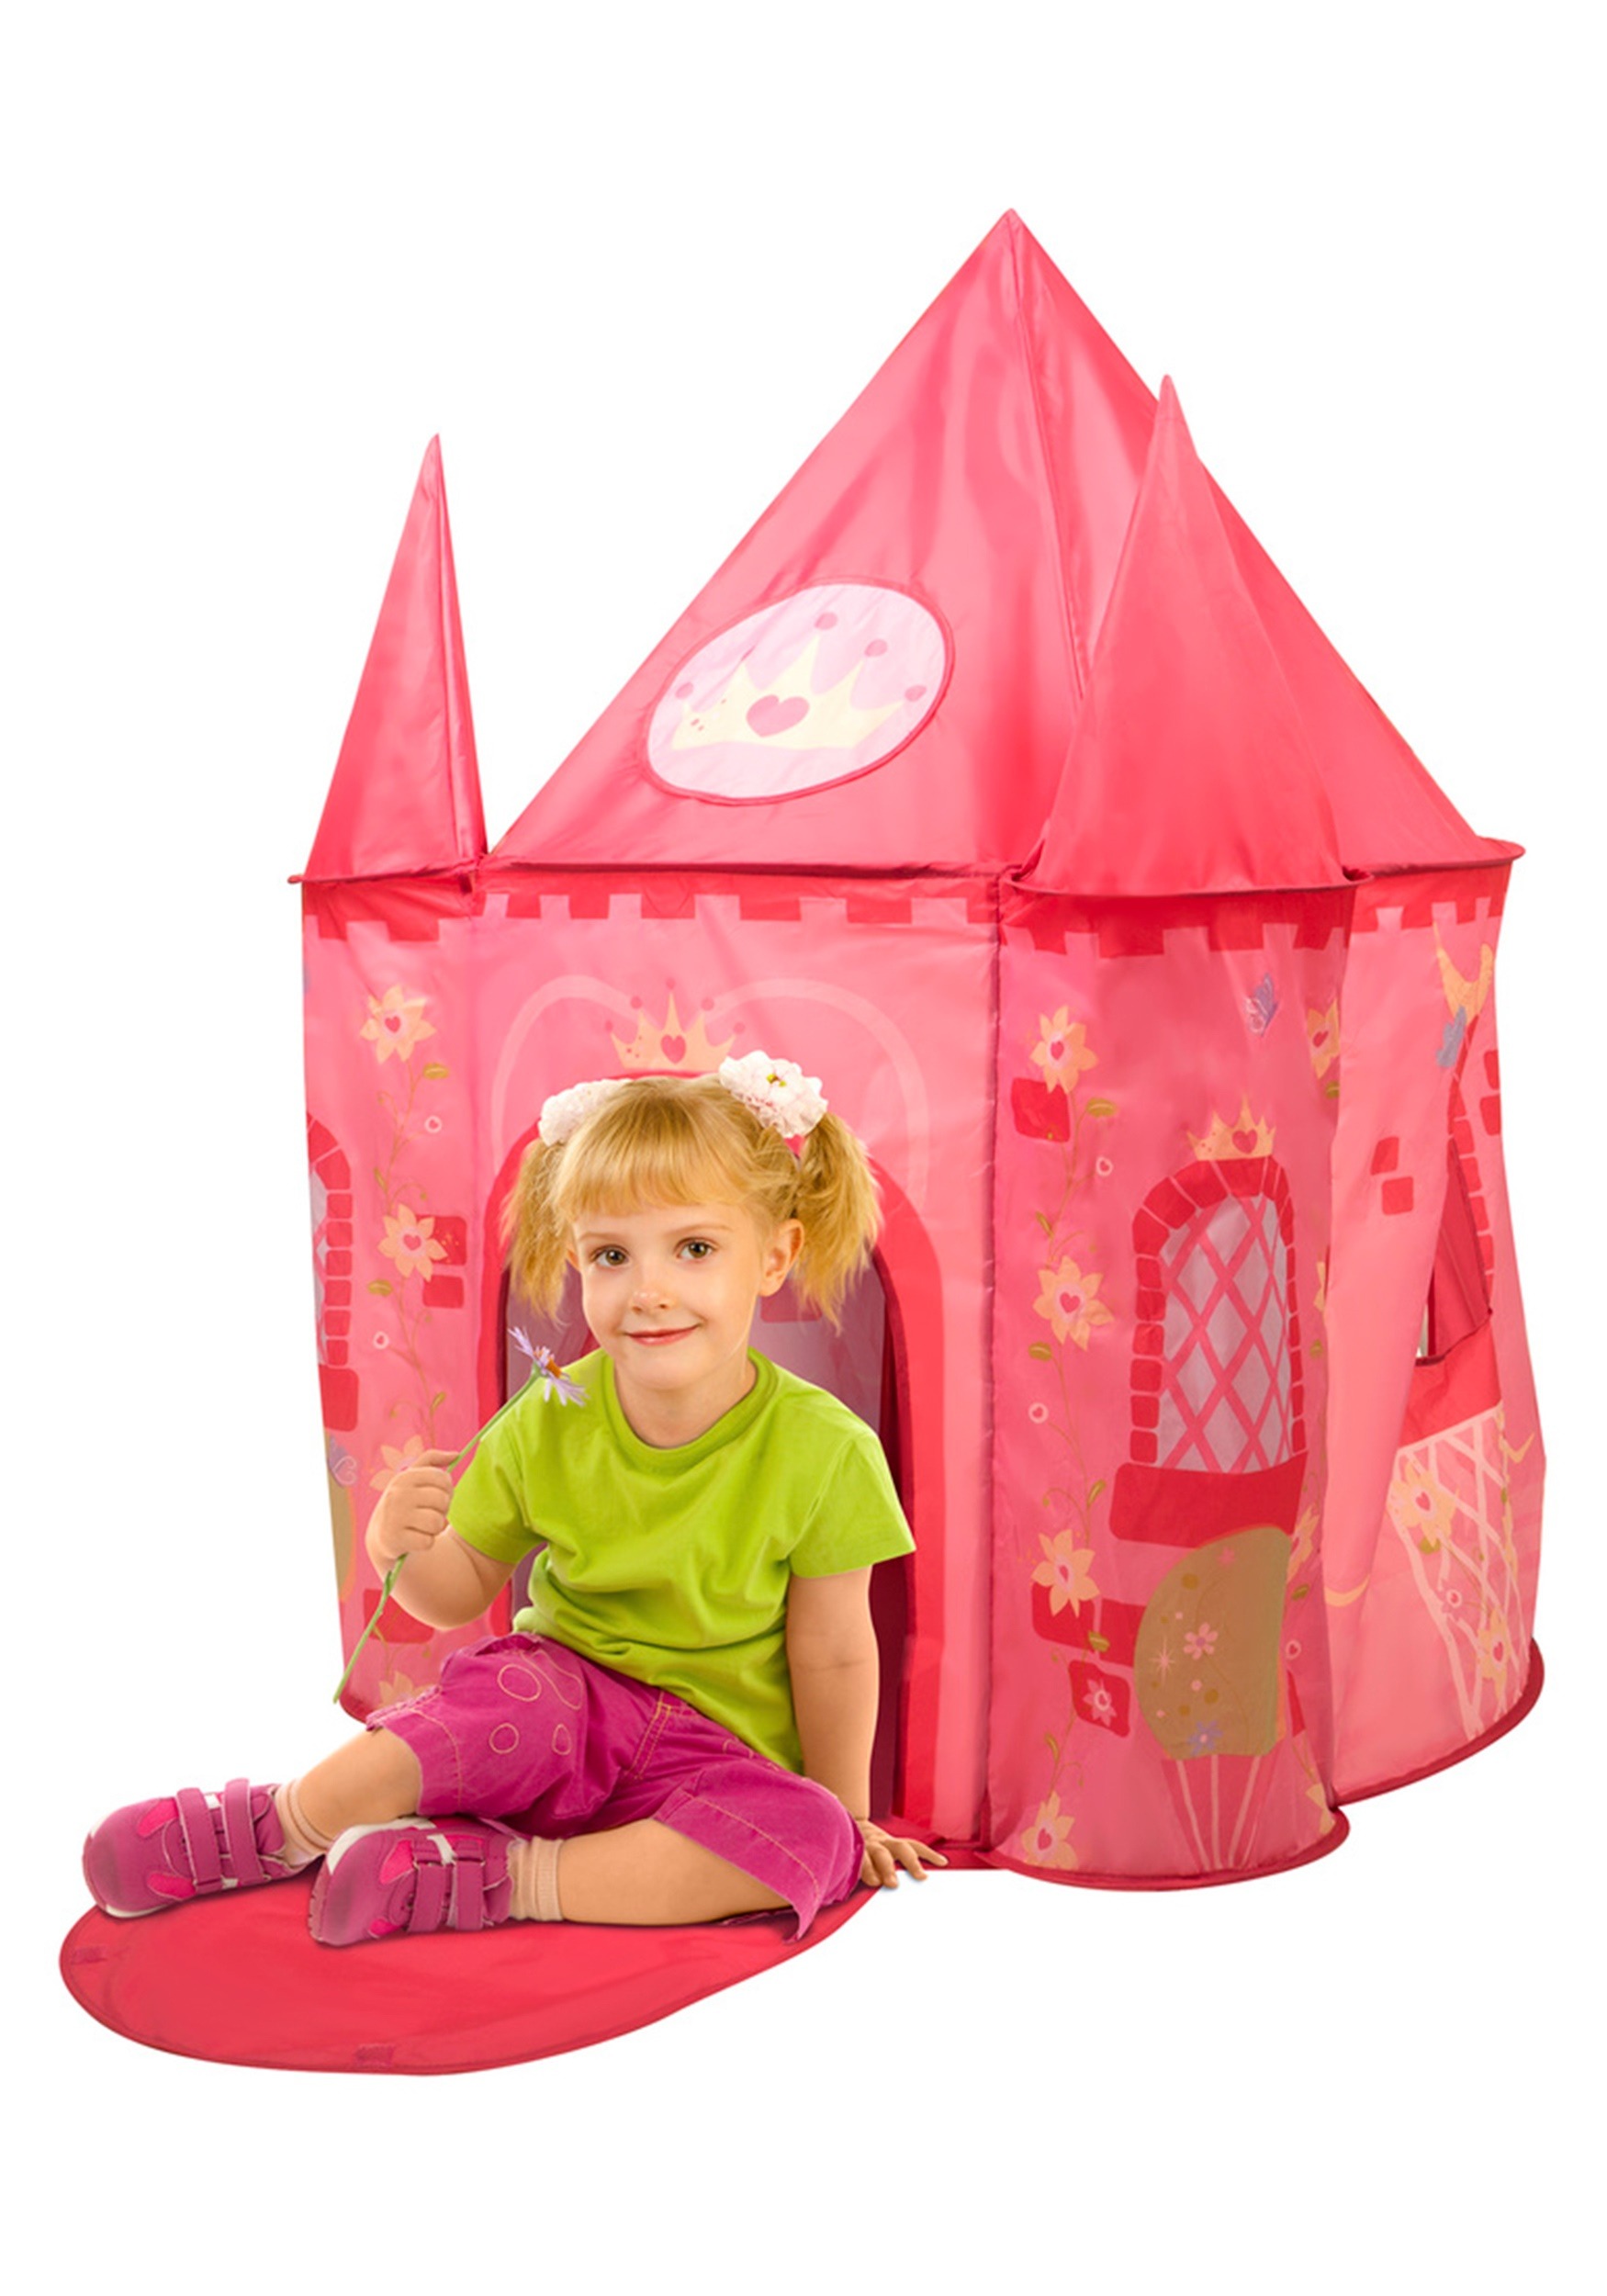 Princess Castle Play Tent for Children